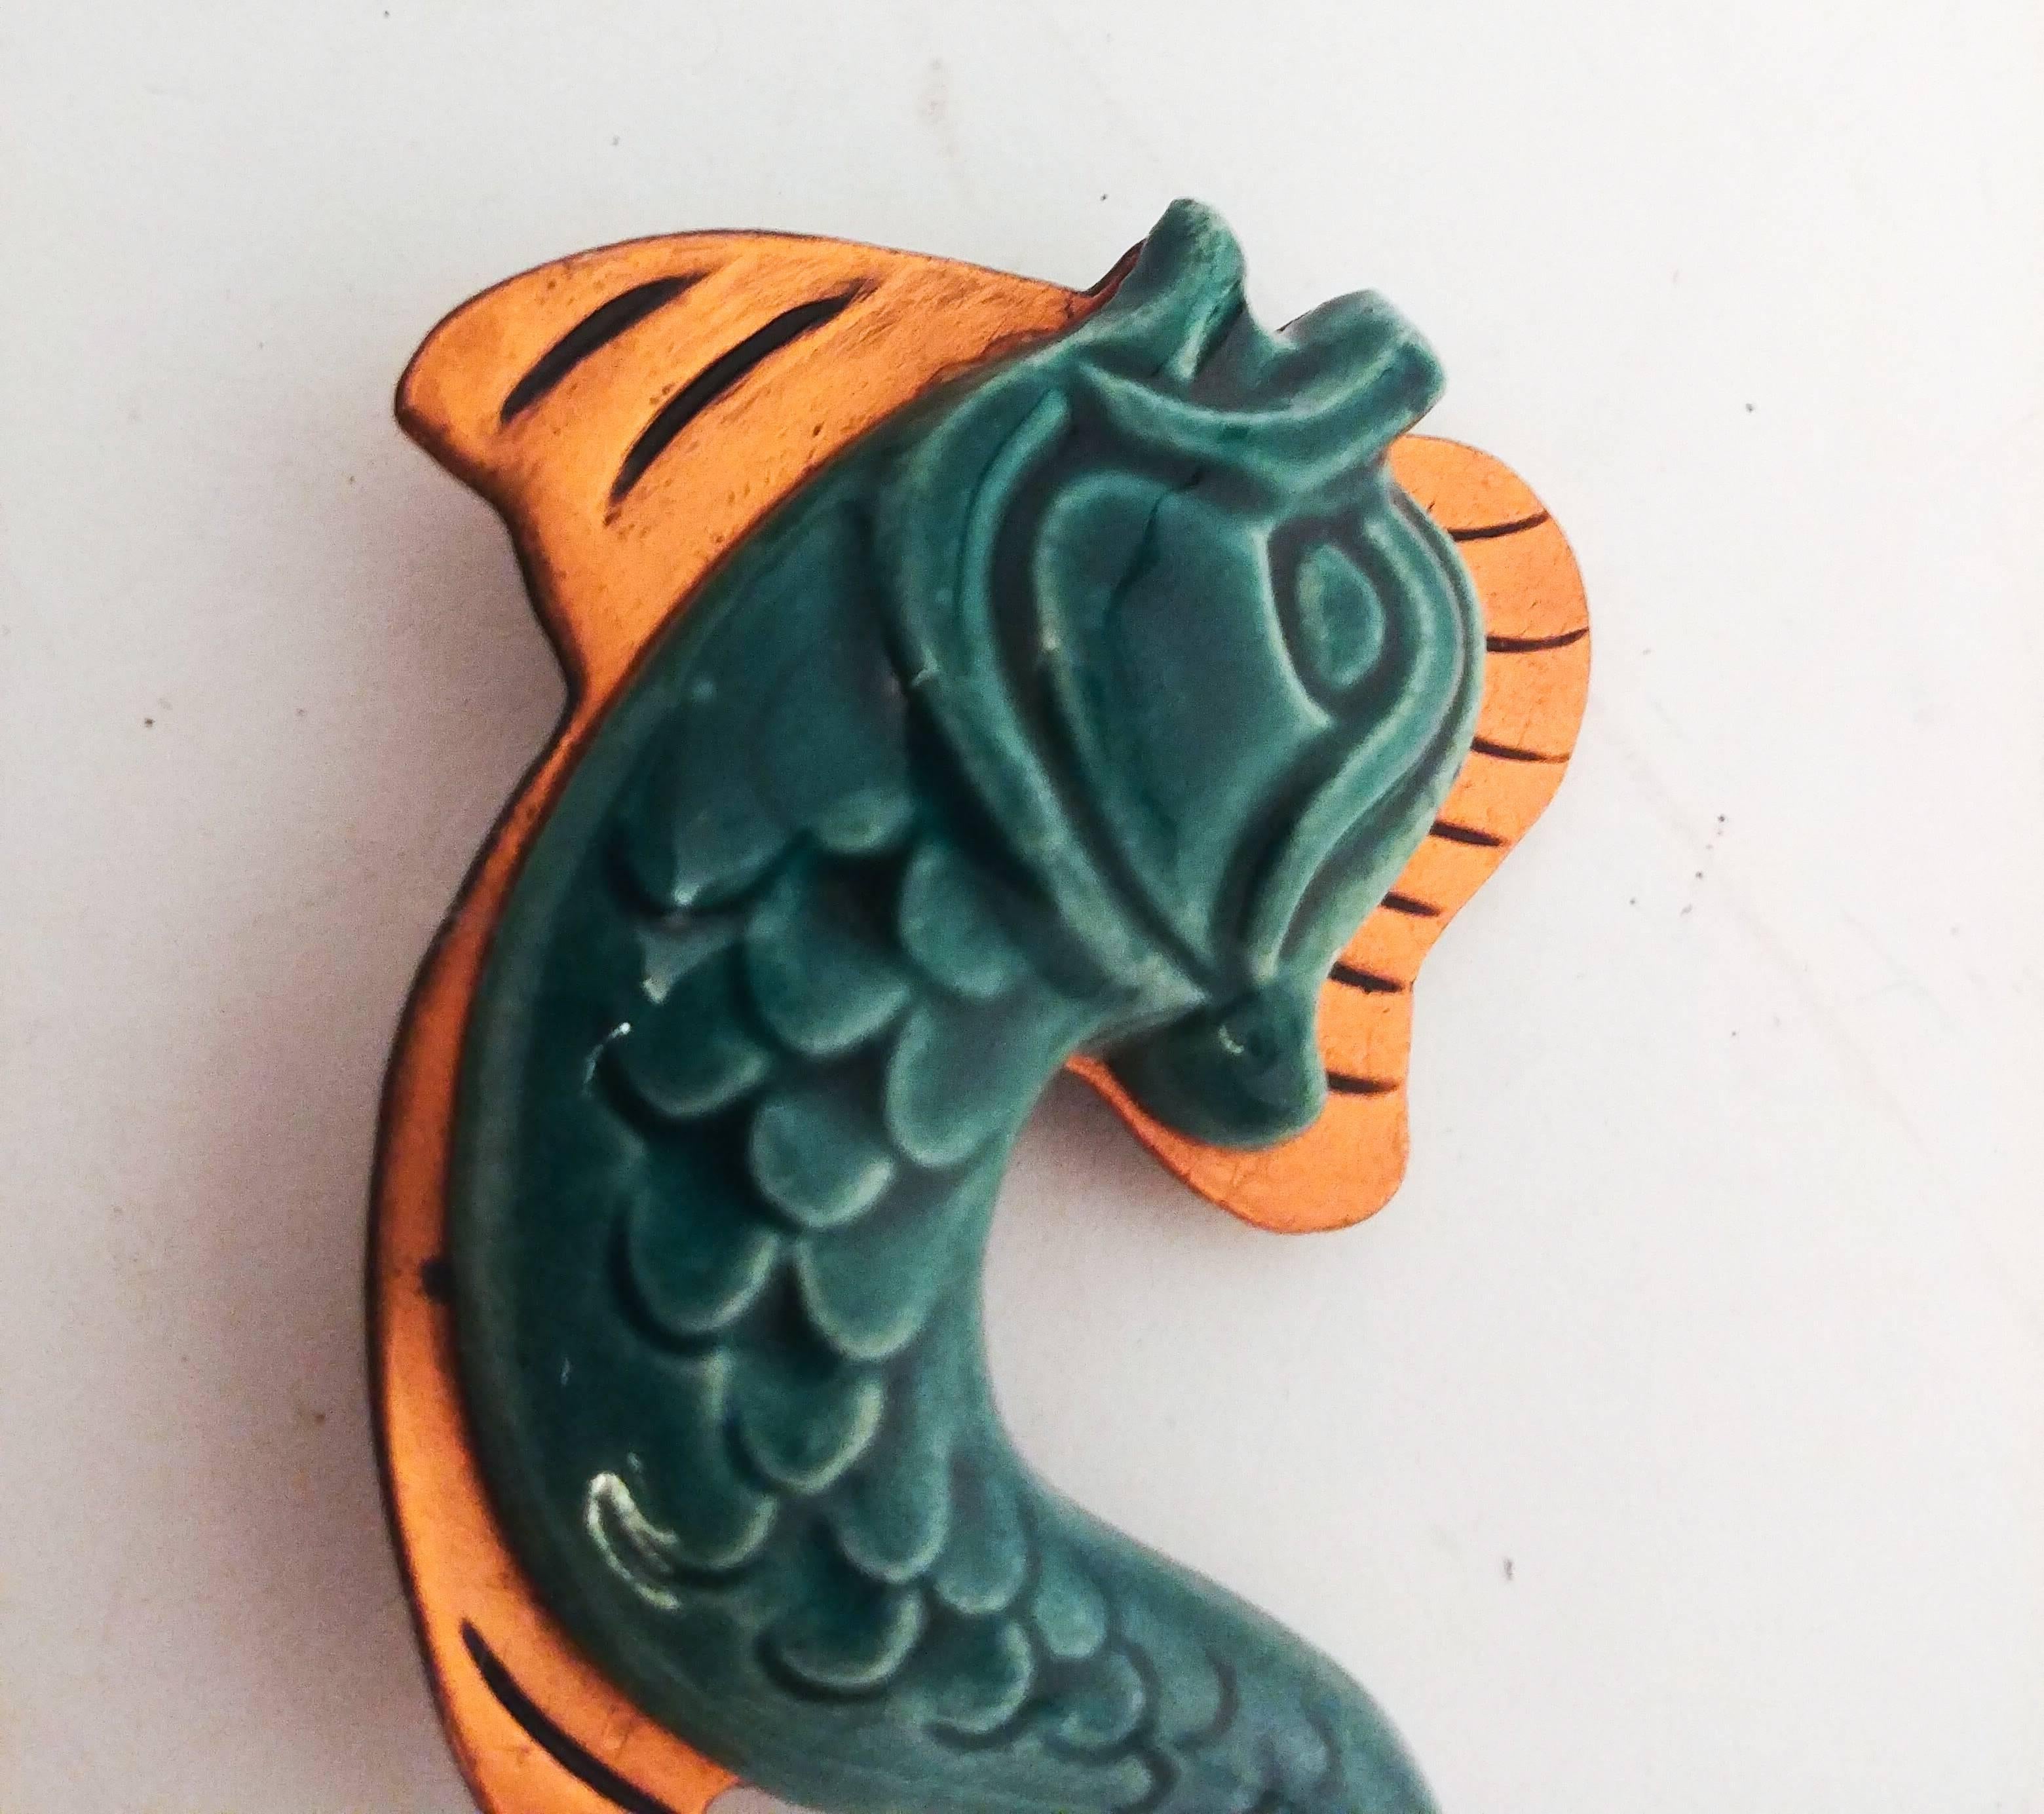 1960s Ceramic & Copper Fish Brooch. Flat copper base with raised three dimensional glazed ceramic details. 